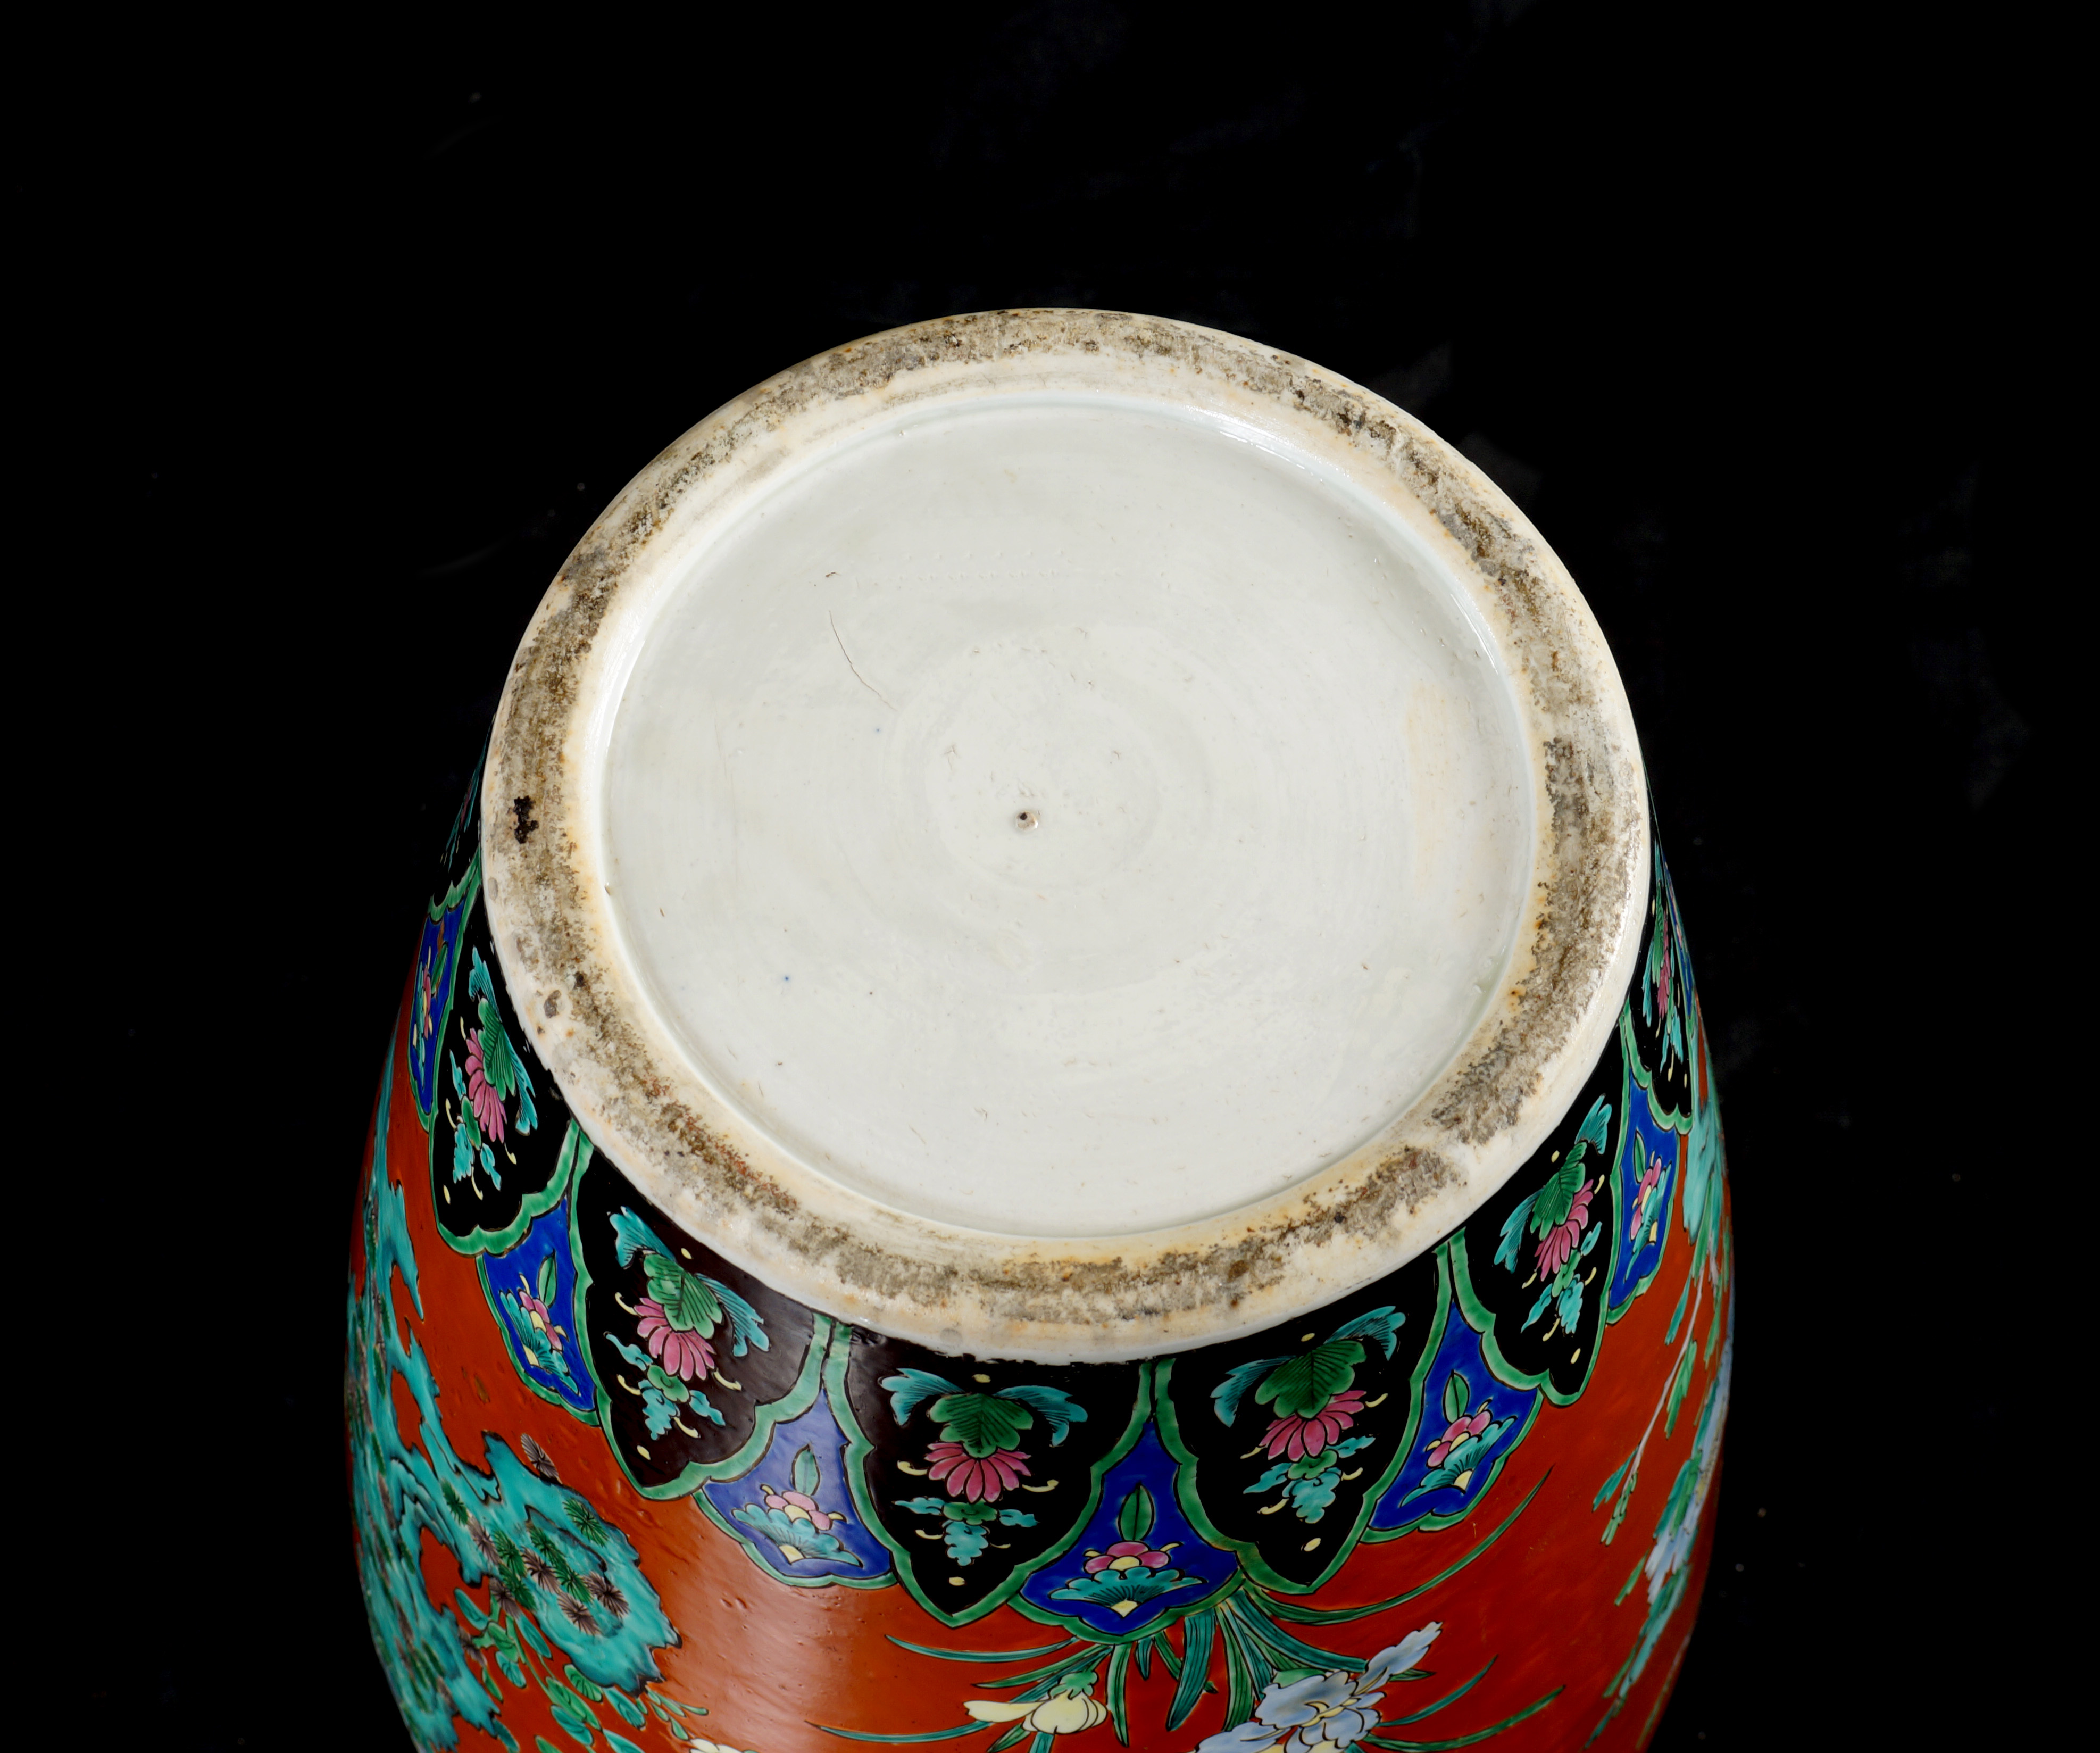 A polychromatic porcelain vase China, antique manufacture h. 70 cm. - Image 4 of 5